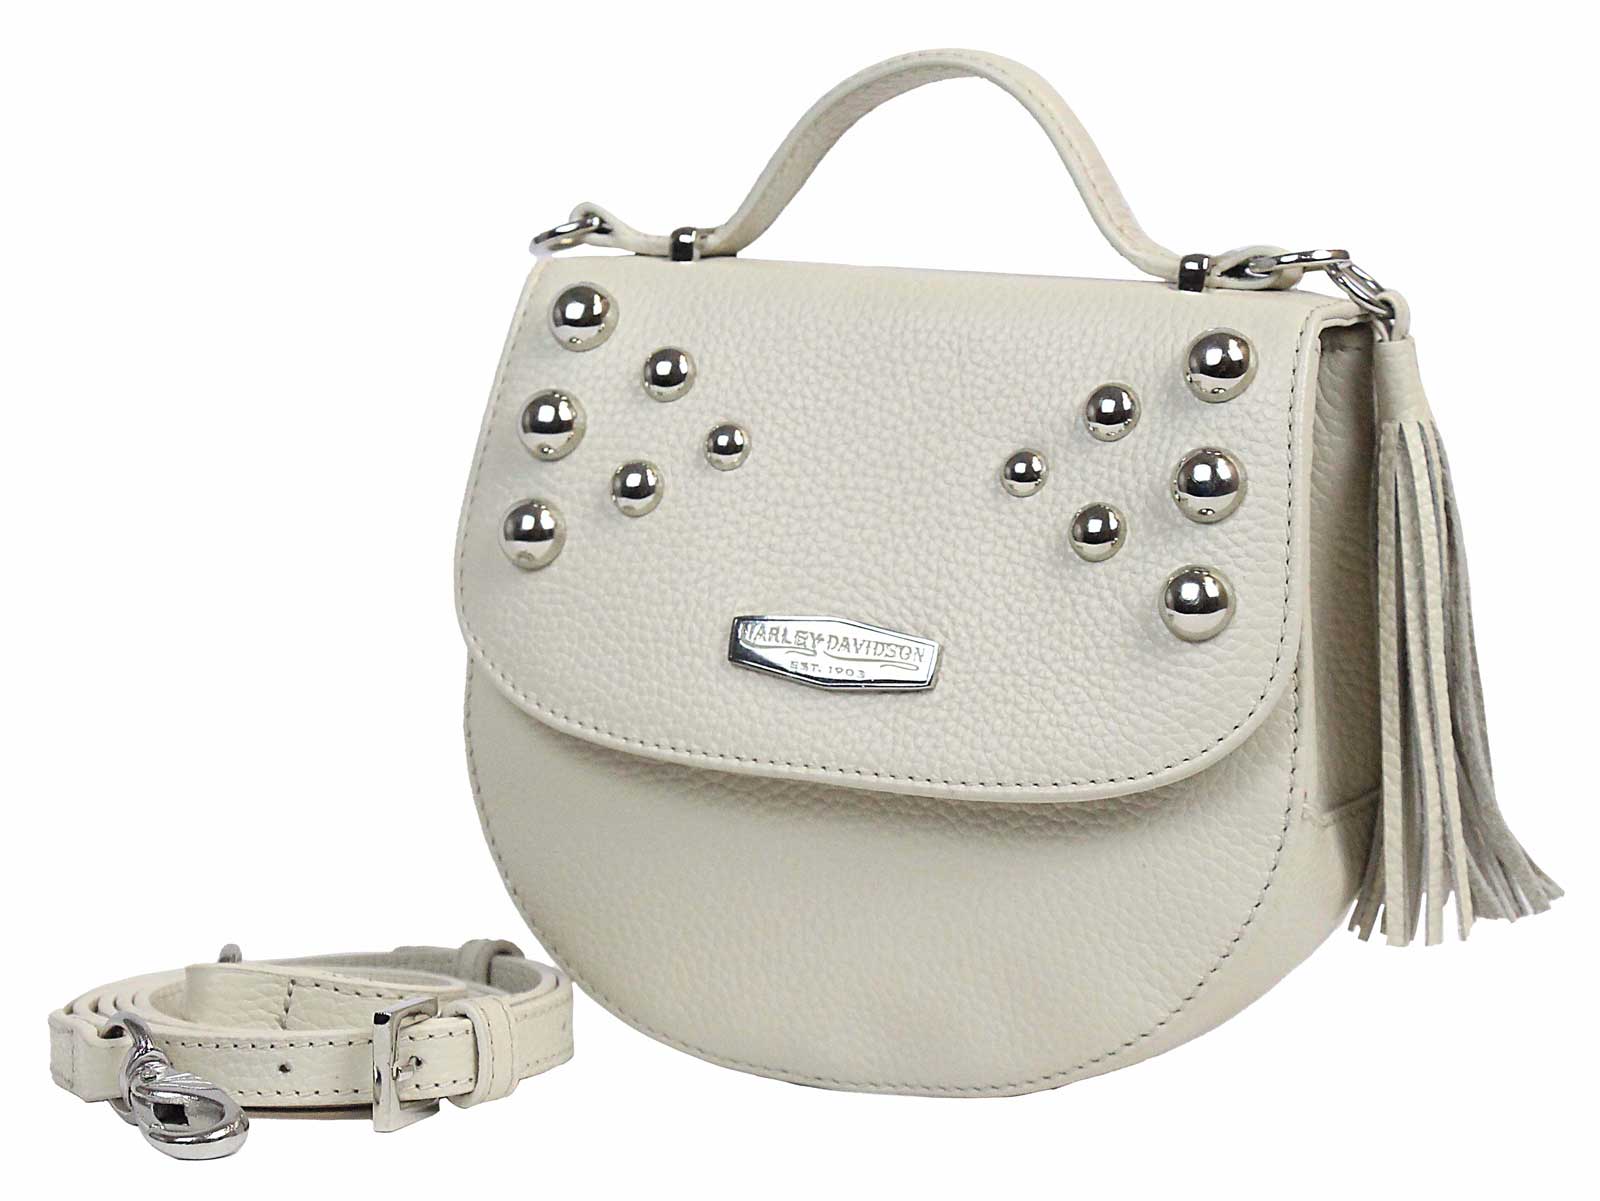 $47.70 - Black Classy Evening Shoulder Purse | Evening purse, Evening  handbag, Purses